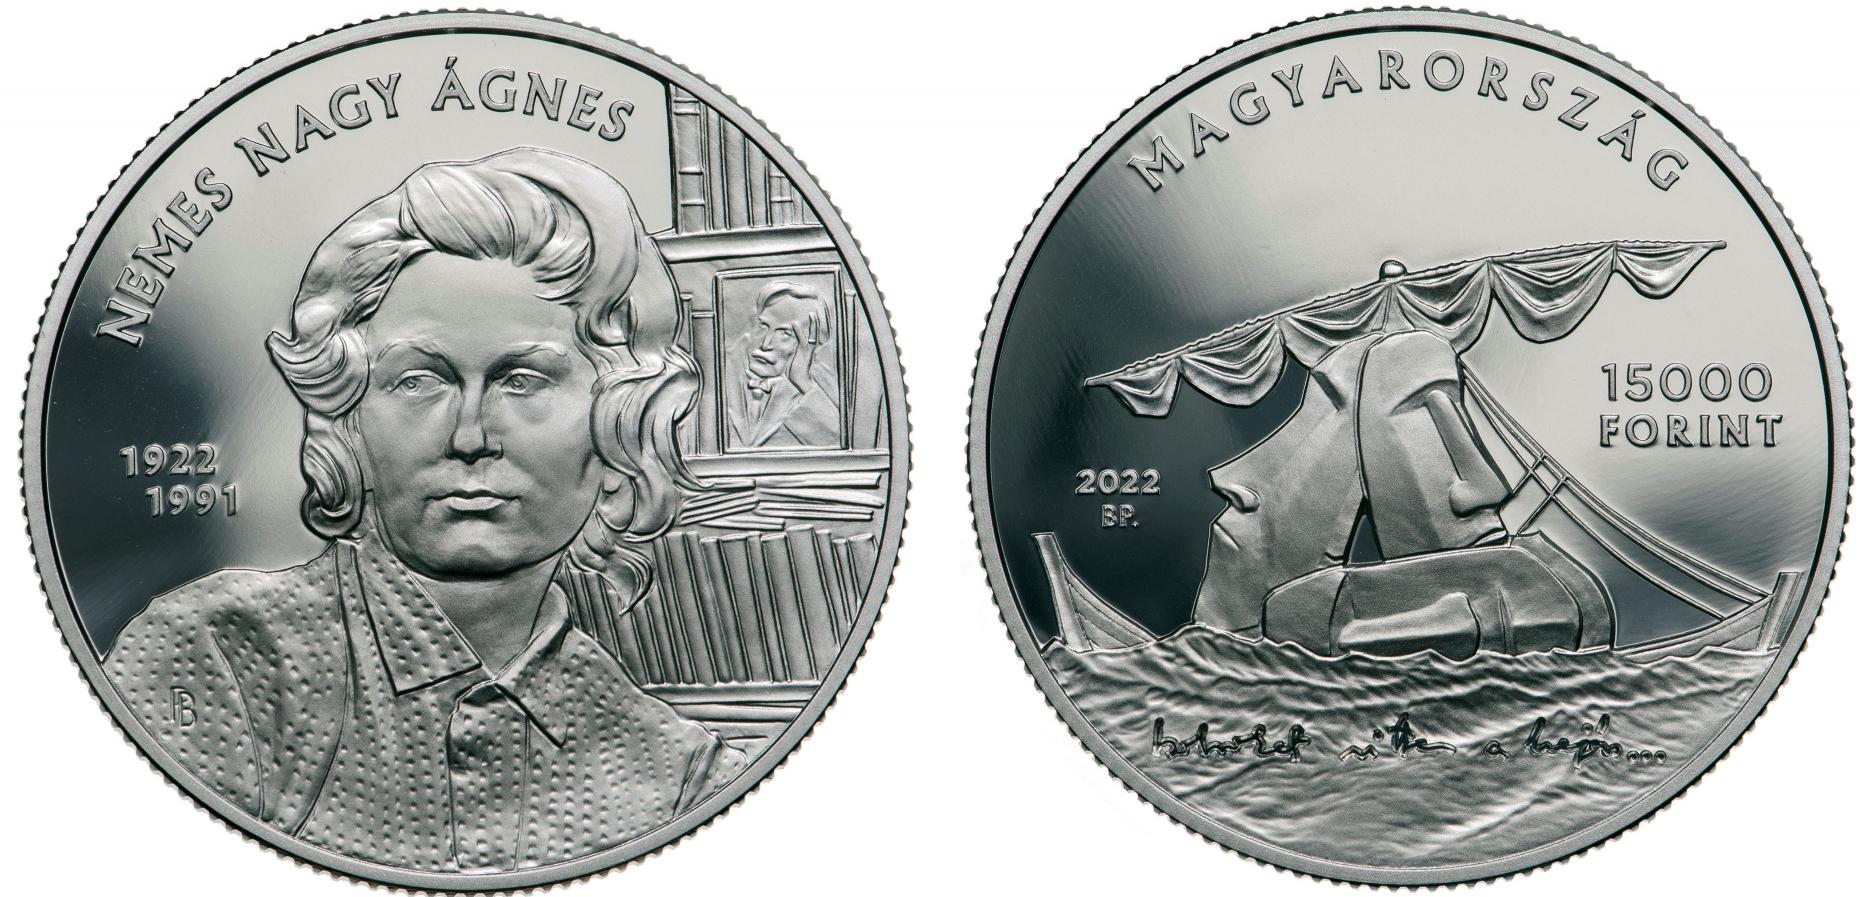 Hungary 15,000 Ft. 2022. Agnes Nemes Nagy. Silver Proof